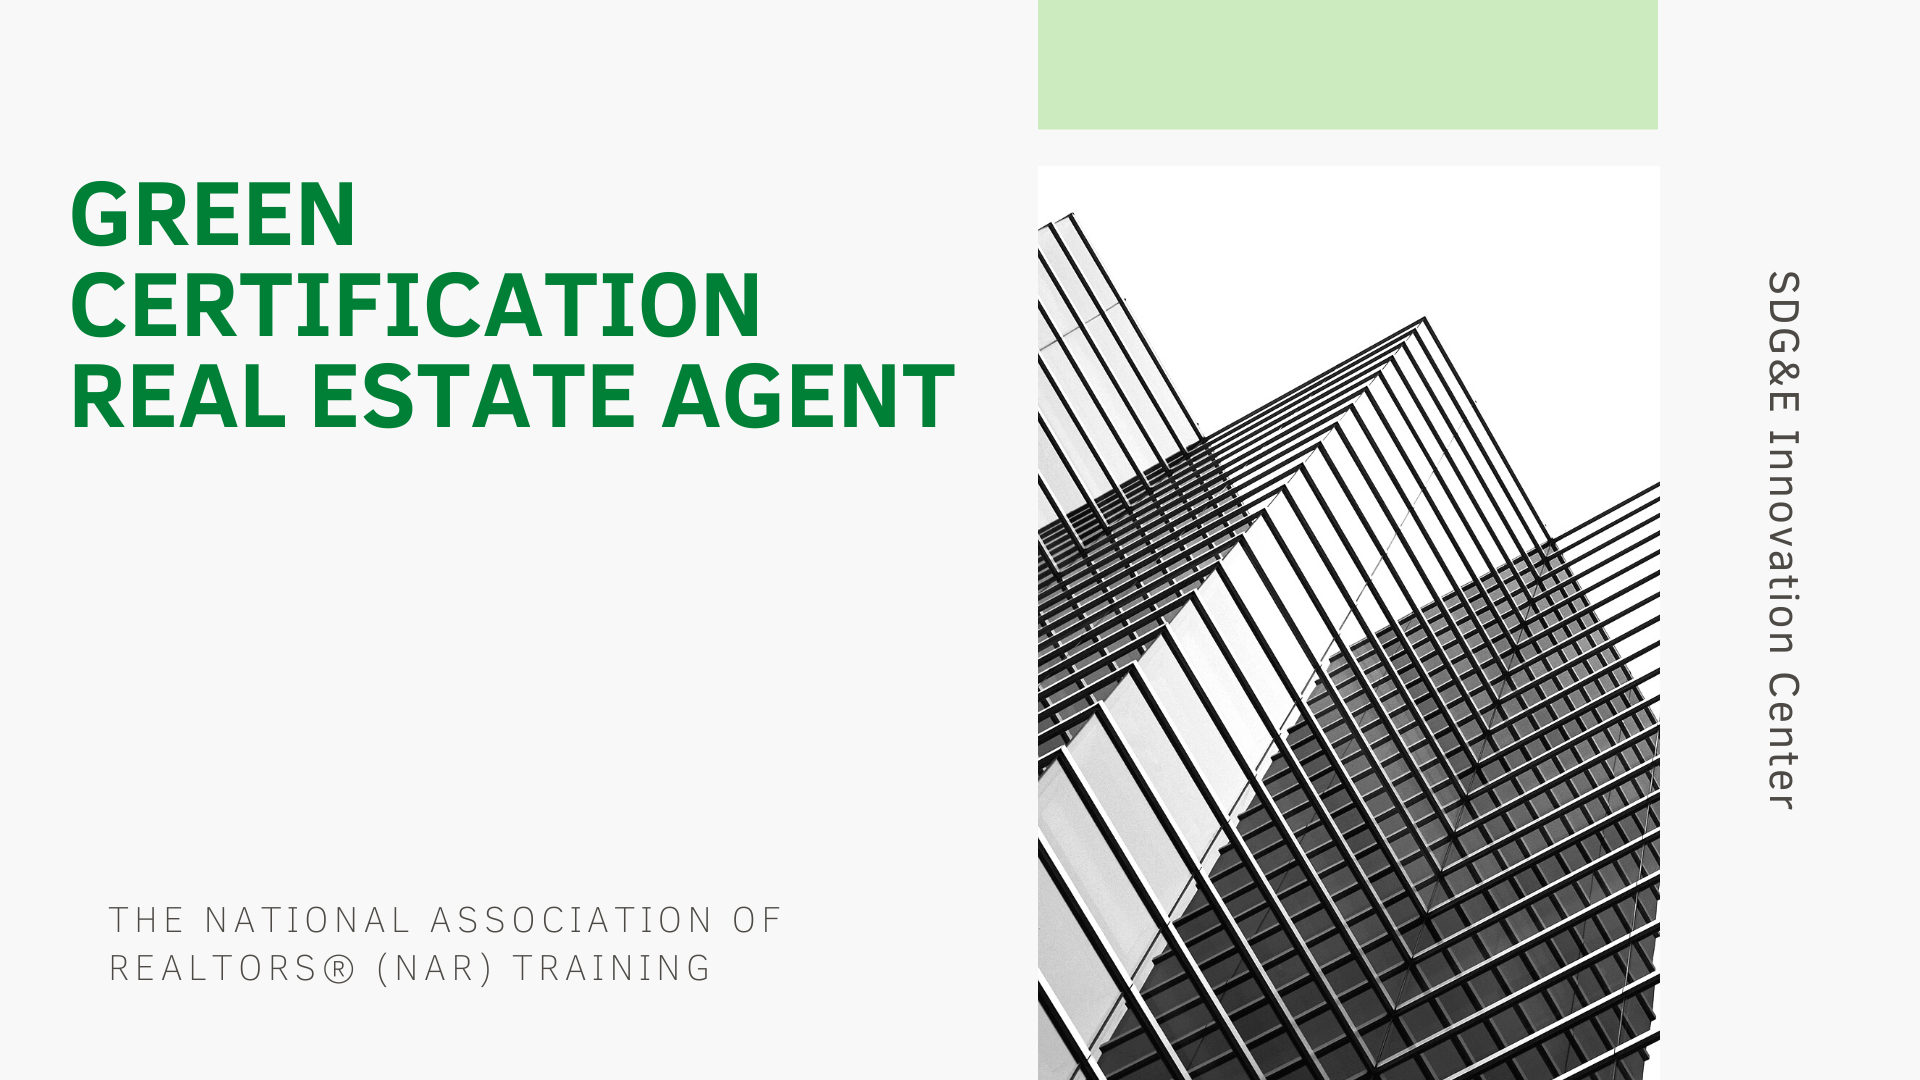 SDG&E to Host Green Designation Certification for Real Estate Agents